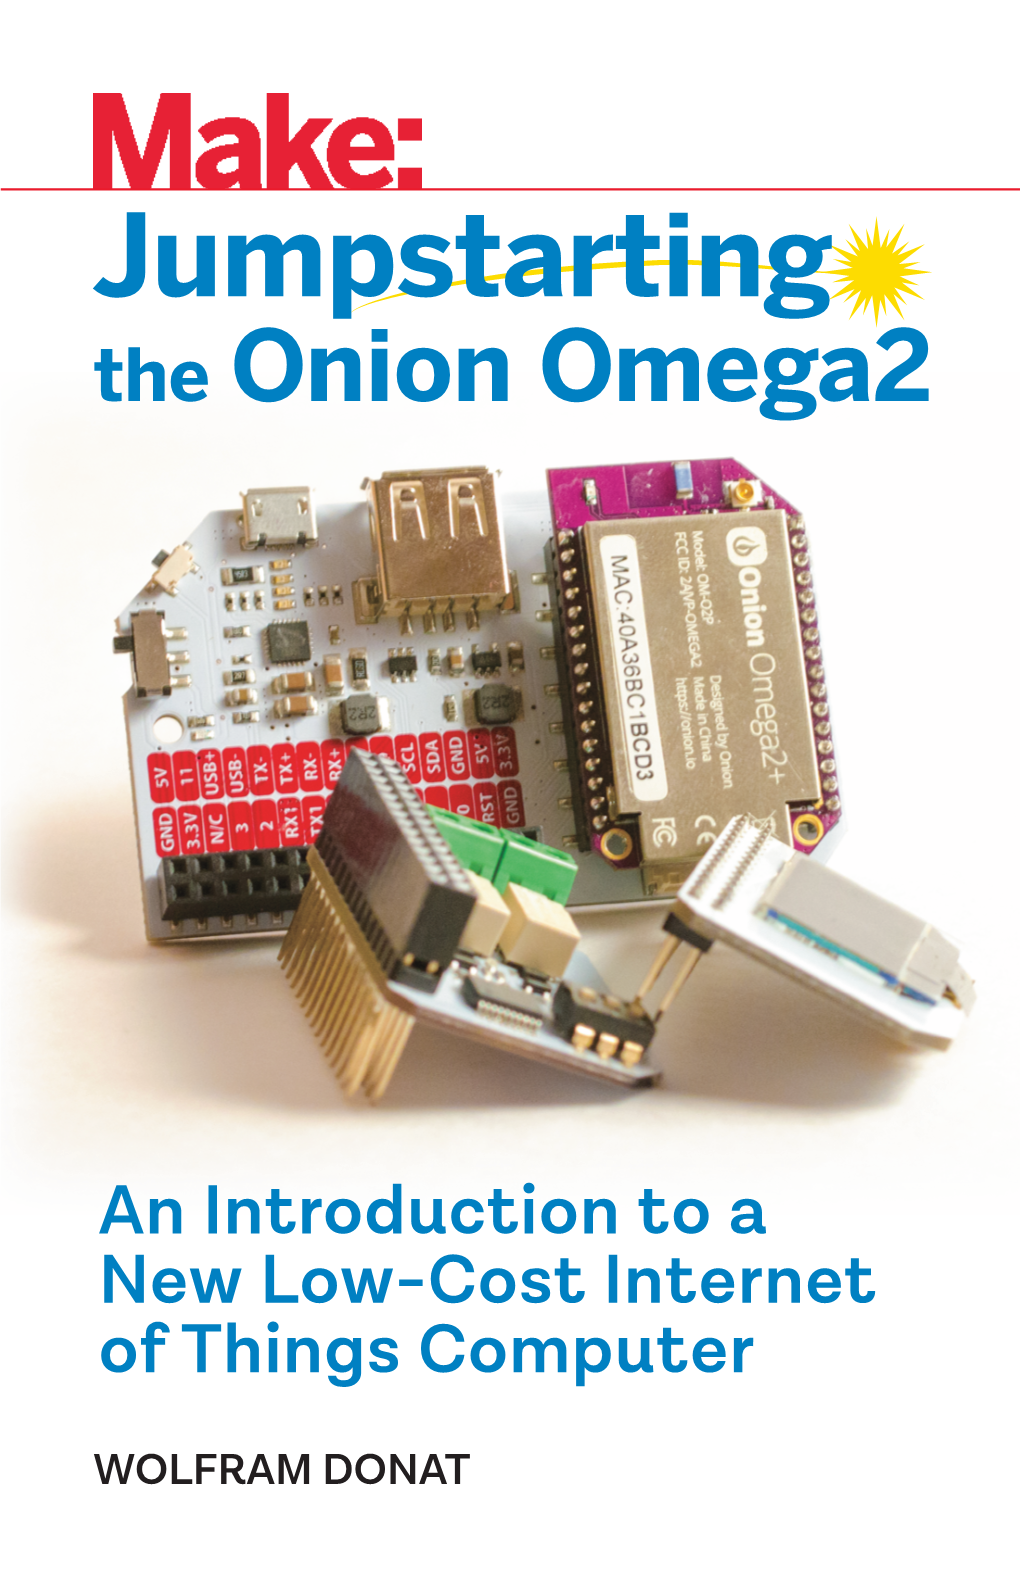 Jumpstarting the Onion Omega2